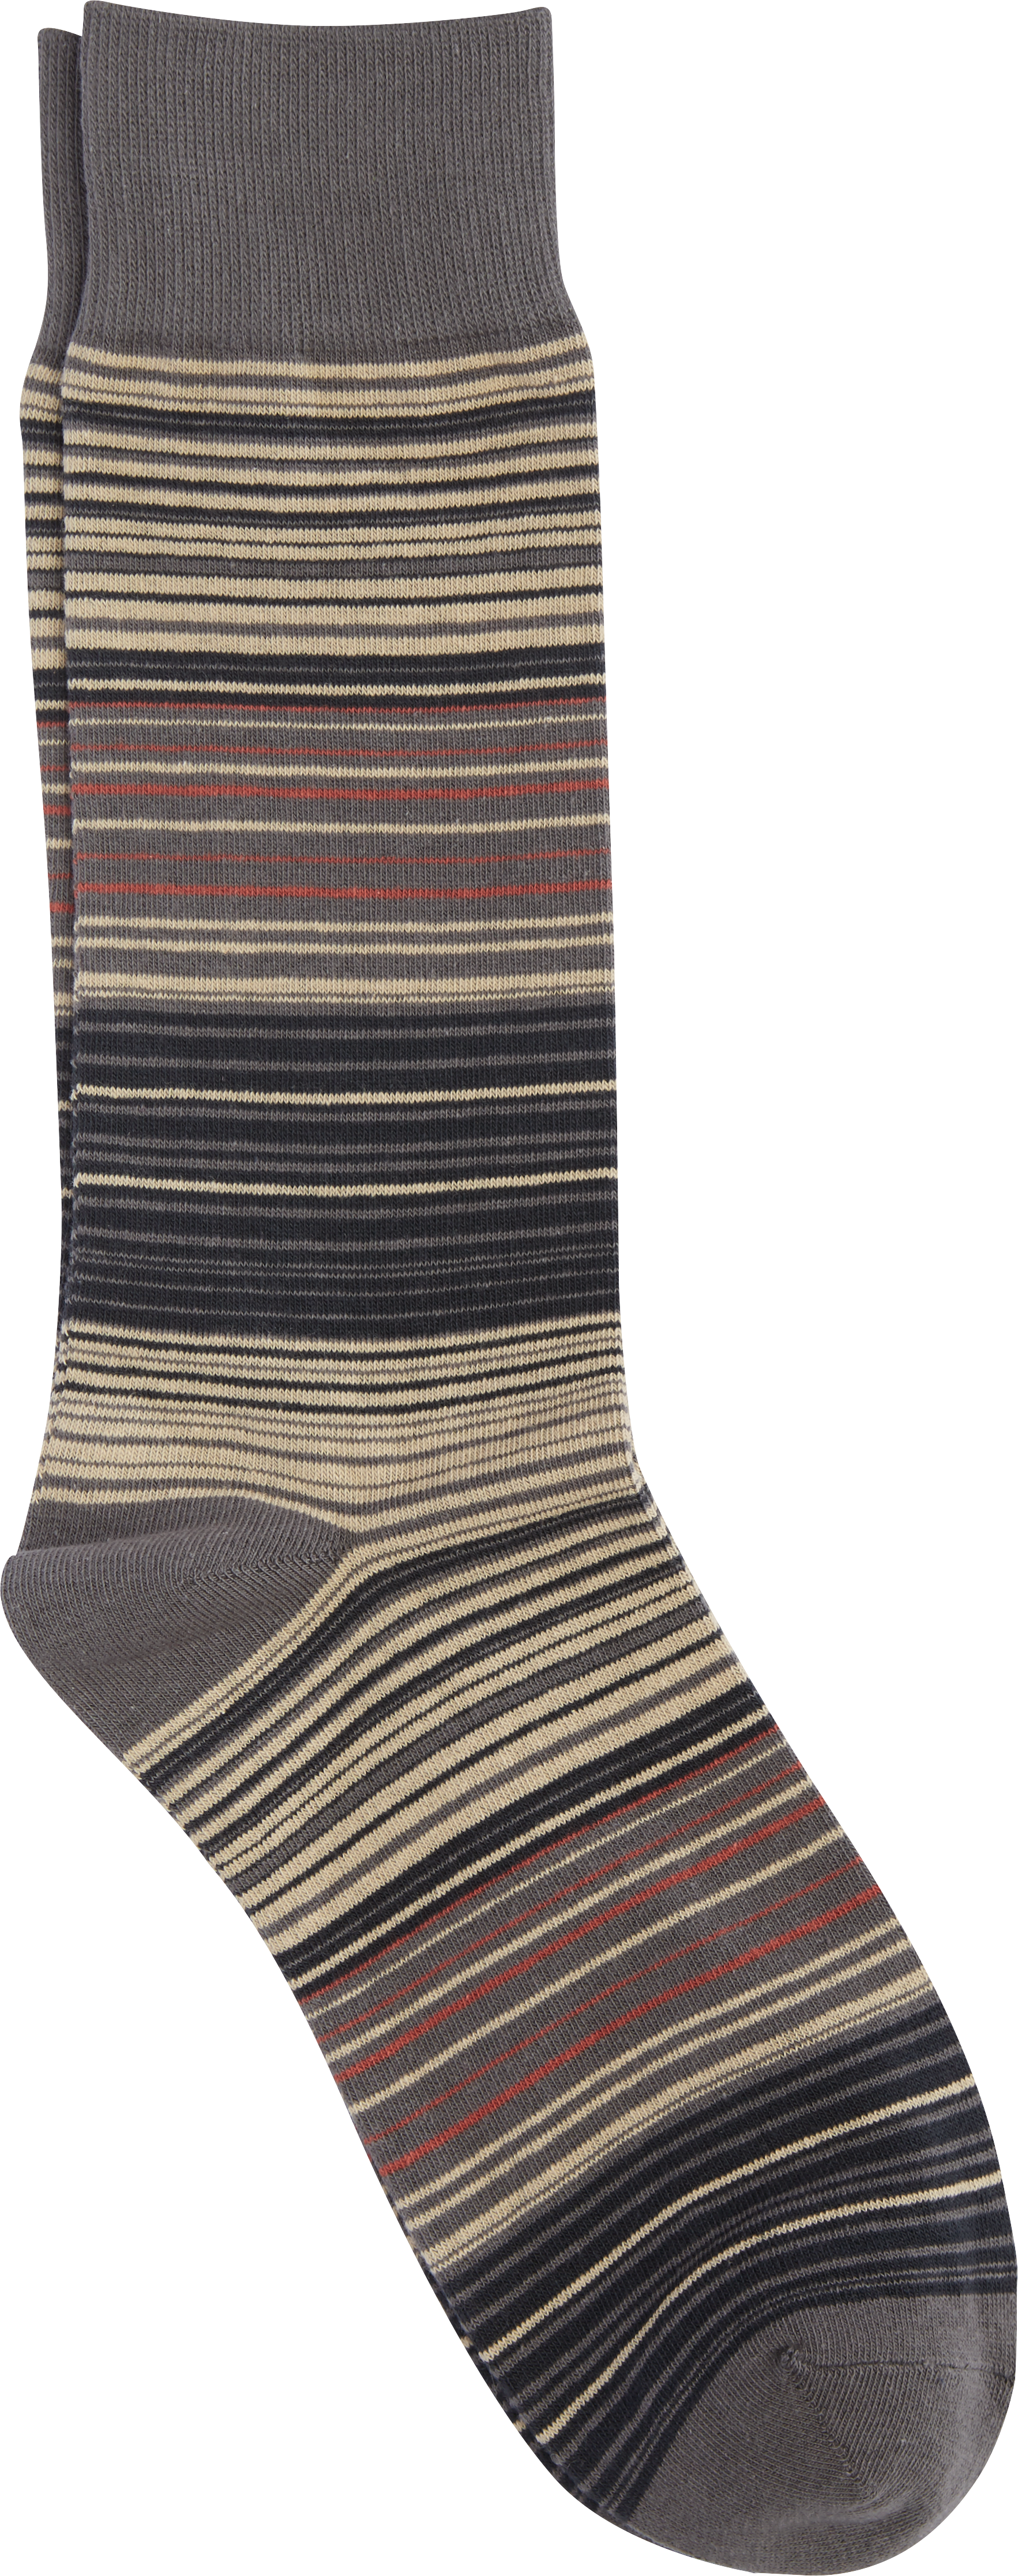 Joe's Gray & Taupe Socks - Men's Accessories | Men's Wearhouse